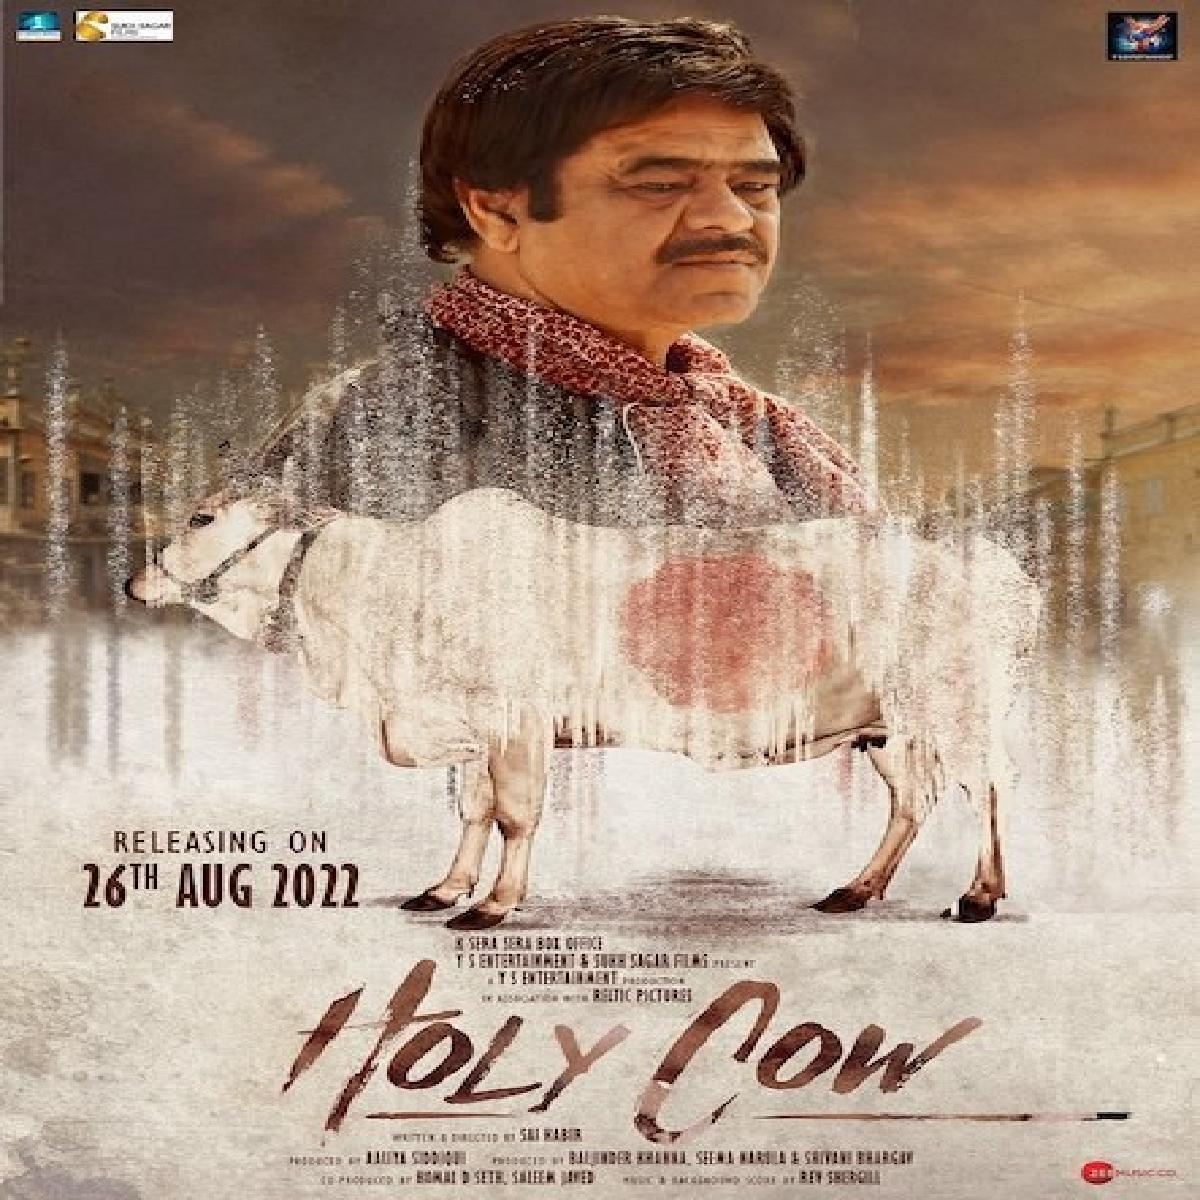 Nawazuddin Siddiqui Starrer Holy Cow Teaser Out Tomorrow